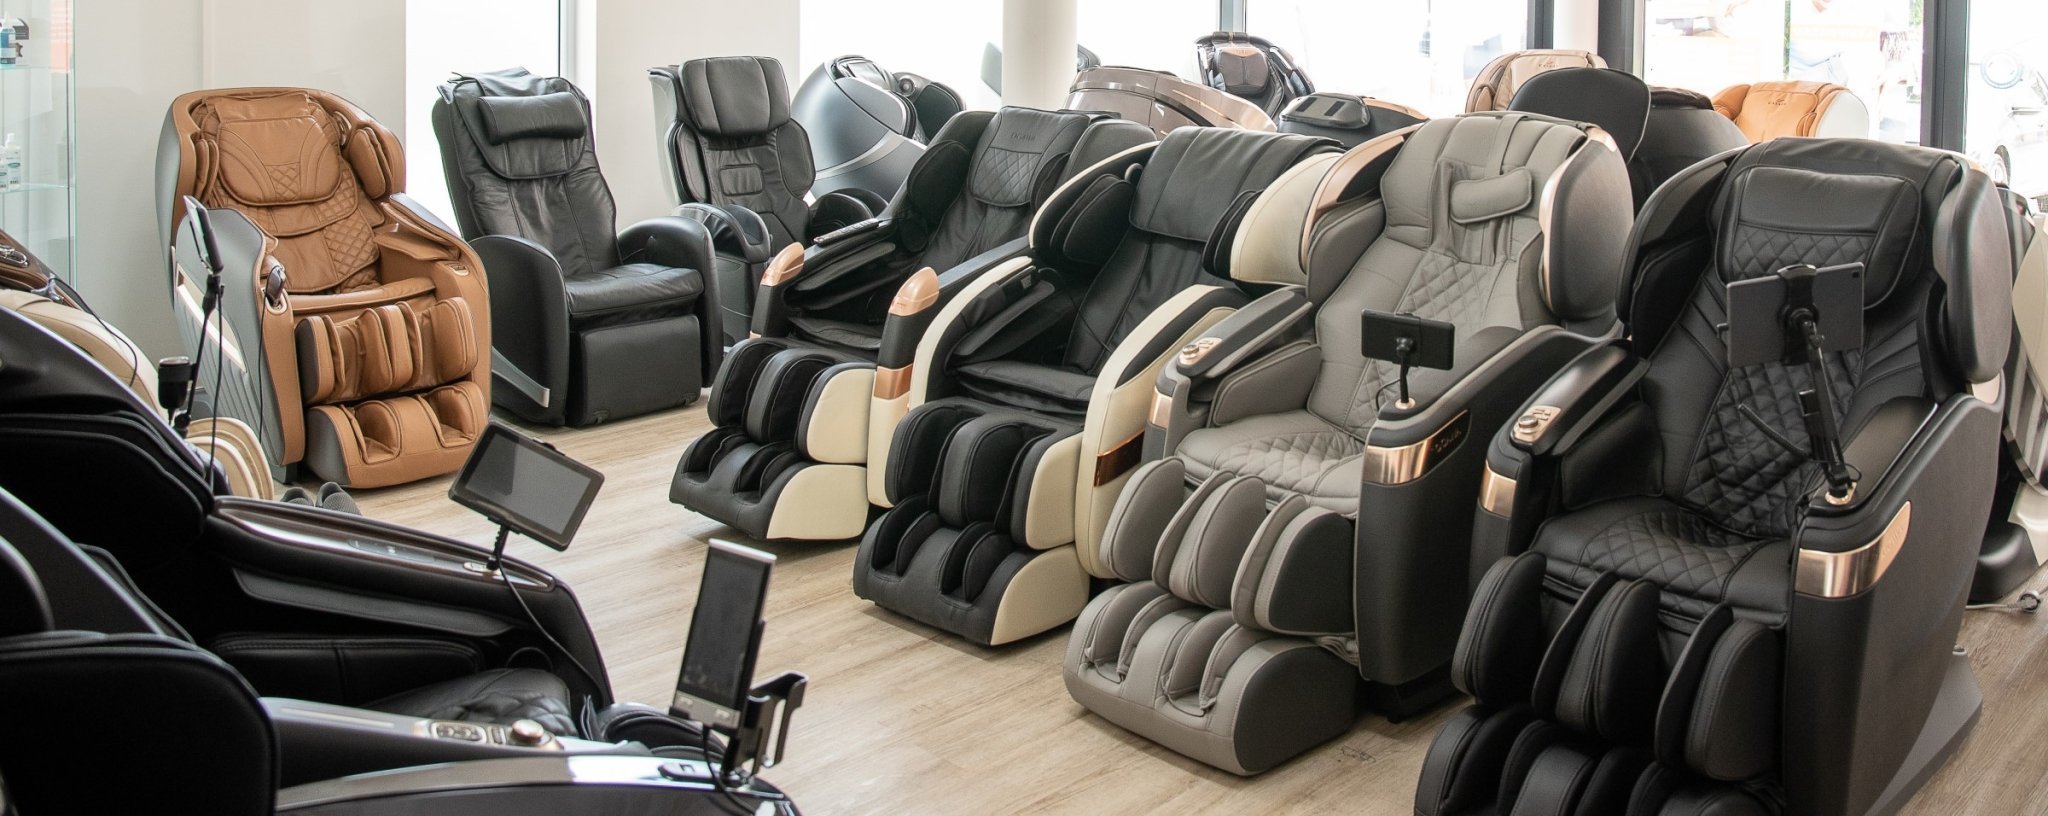 Nuestros sillones de masaje OUTLET - Massage chair world